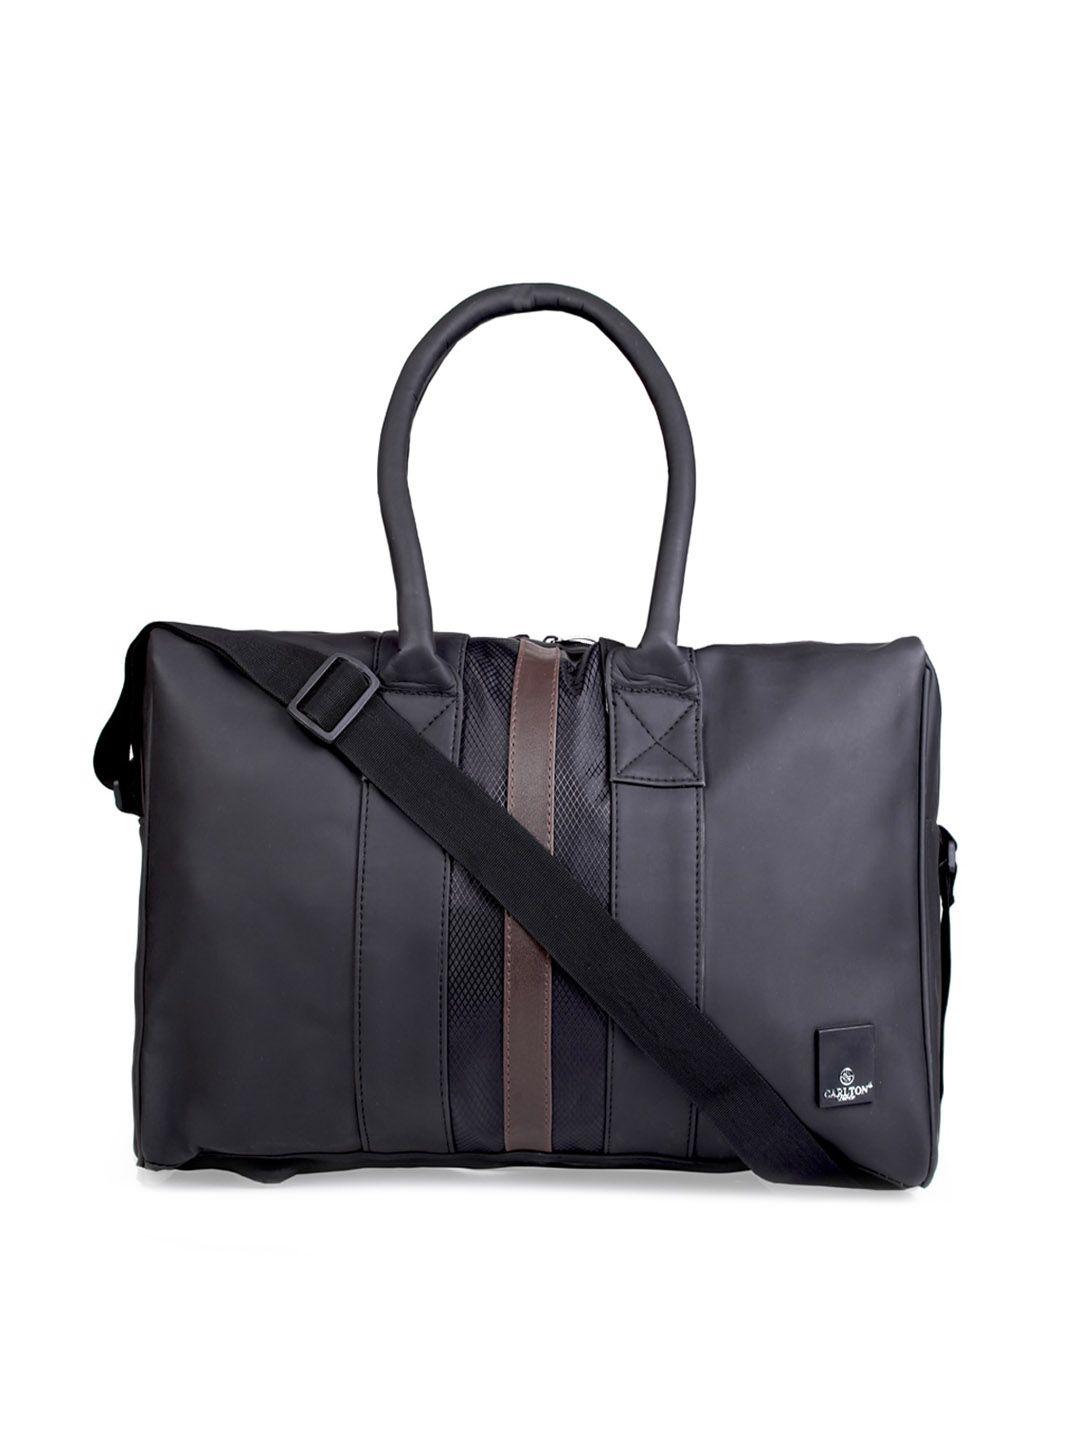 carlton-london-textured-leather-duffel-bag